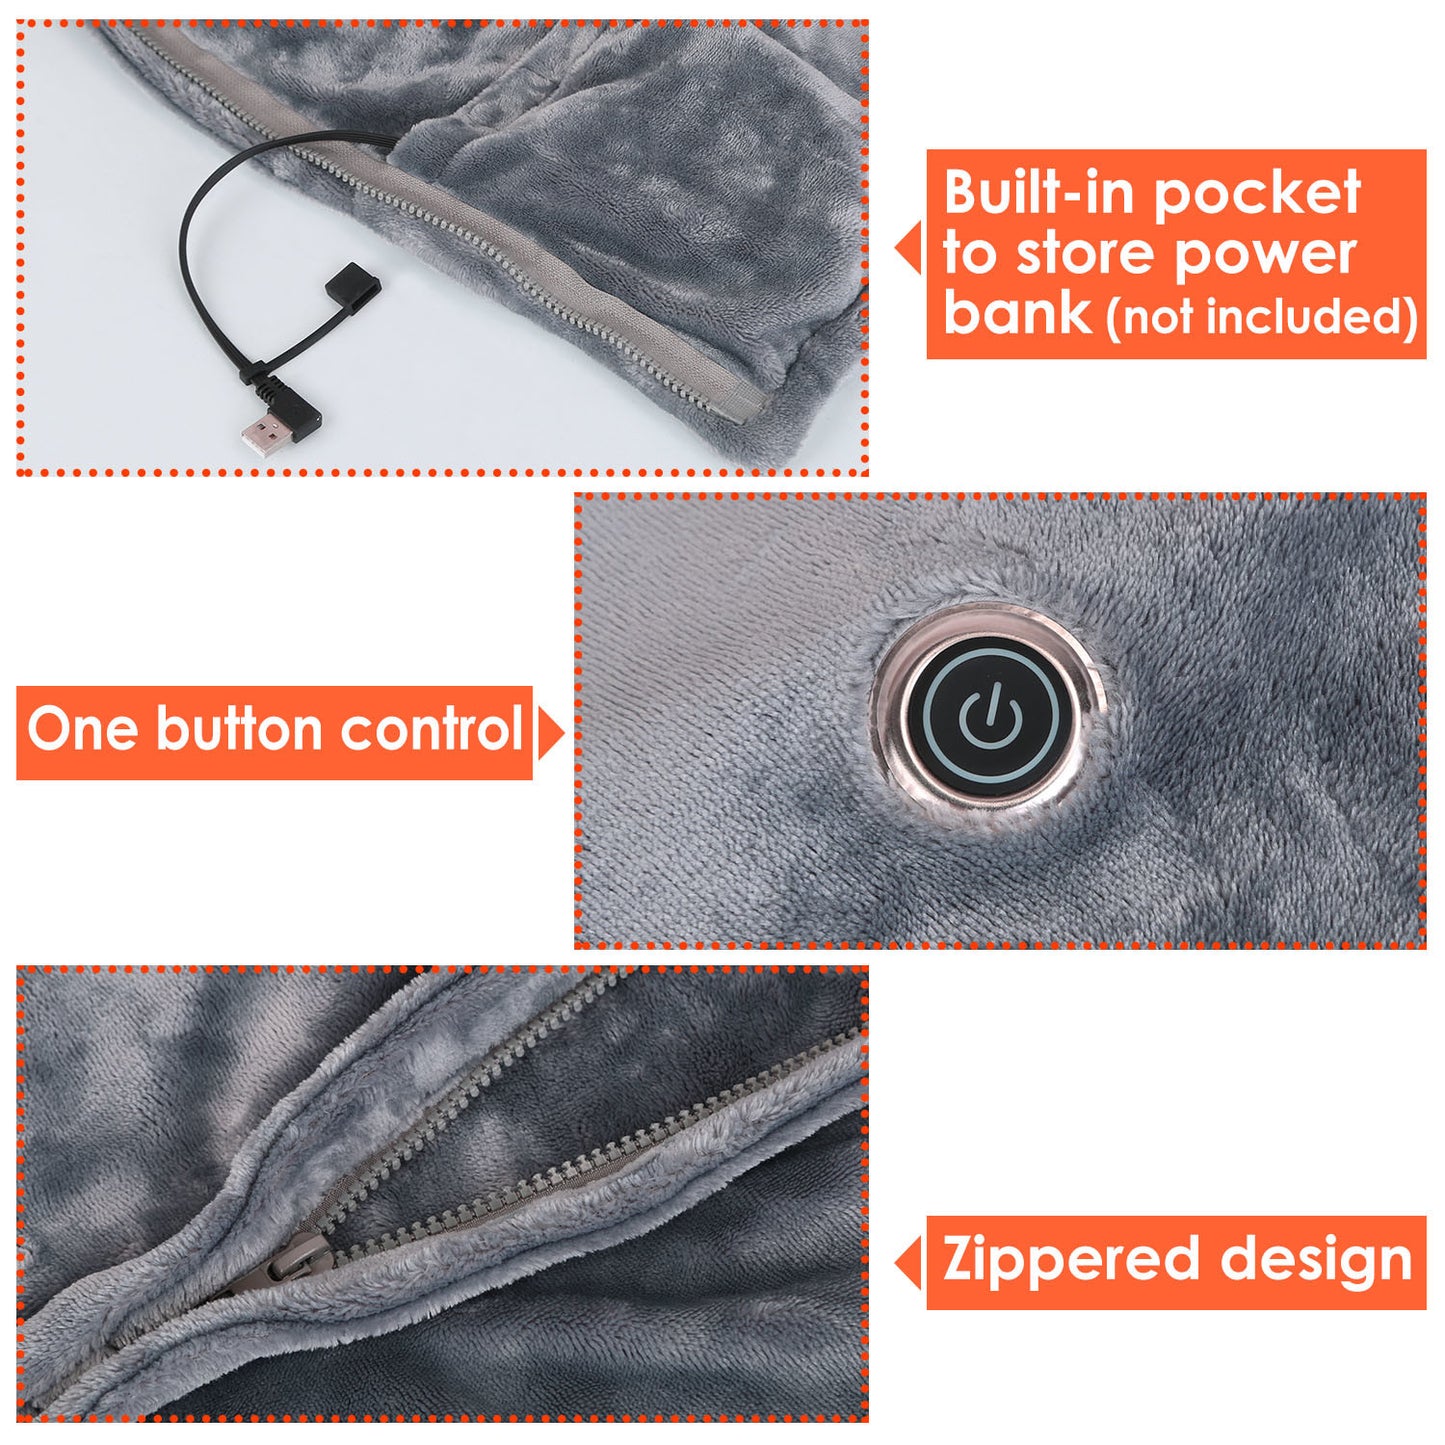 USB Heated Blanket with Zipper - Washable